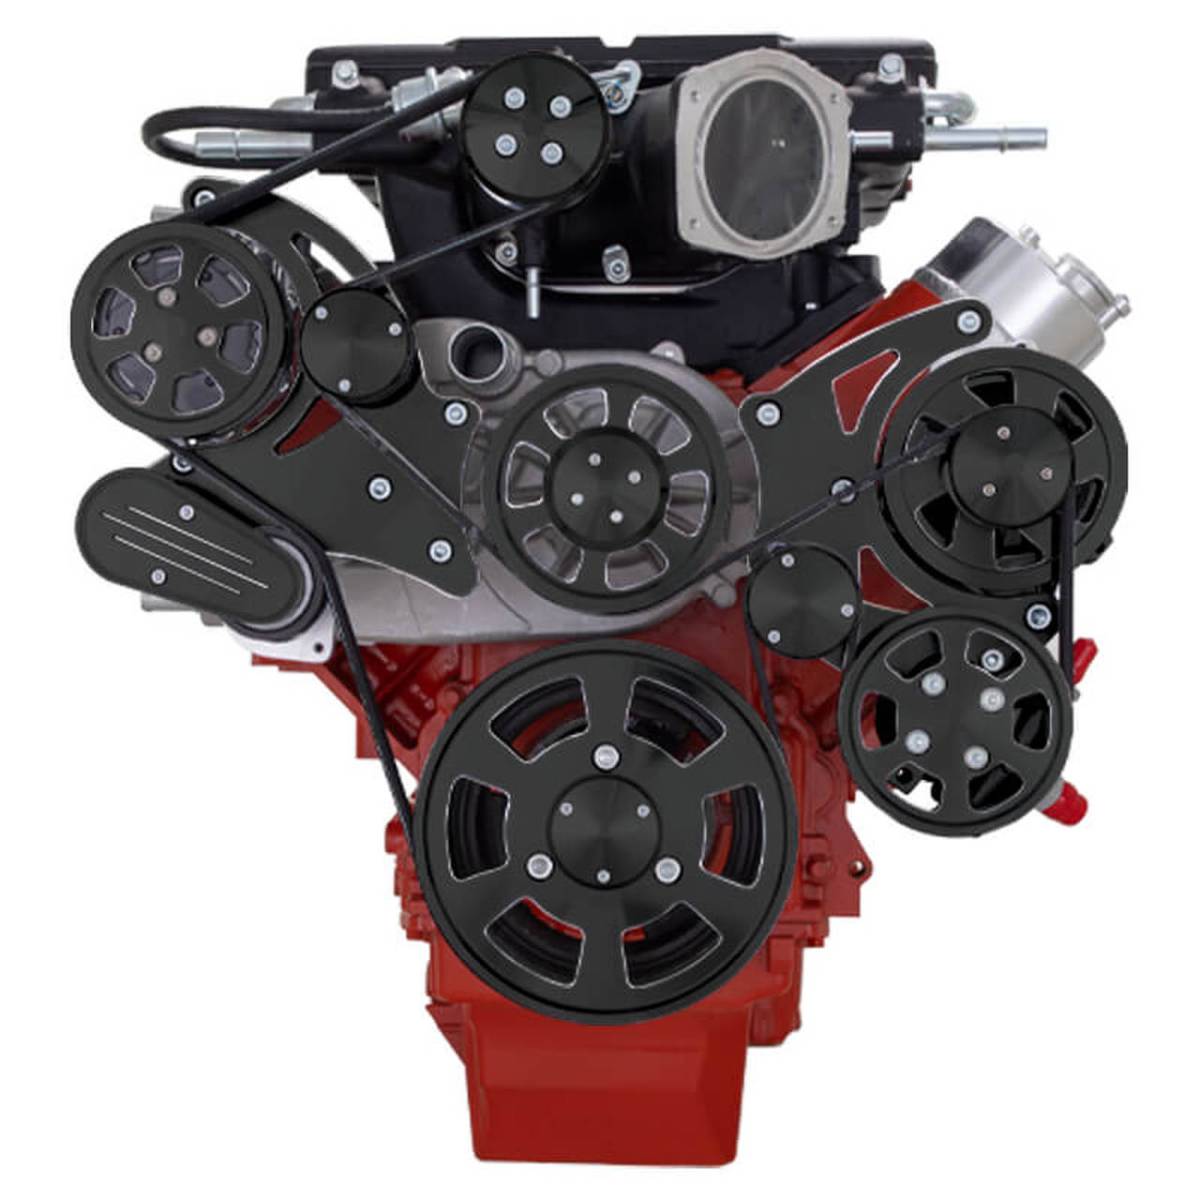 CVF Racing - CVF Wraptor Chevy LS Engine Magnuson Serpentine Bracket System with Alternator AC and Power Steering - Black Diamond Finish - Image 1